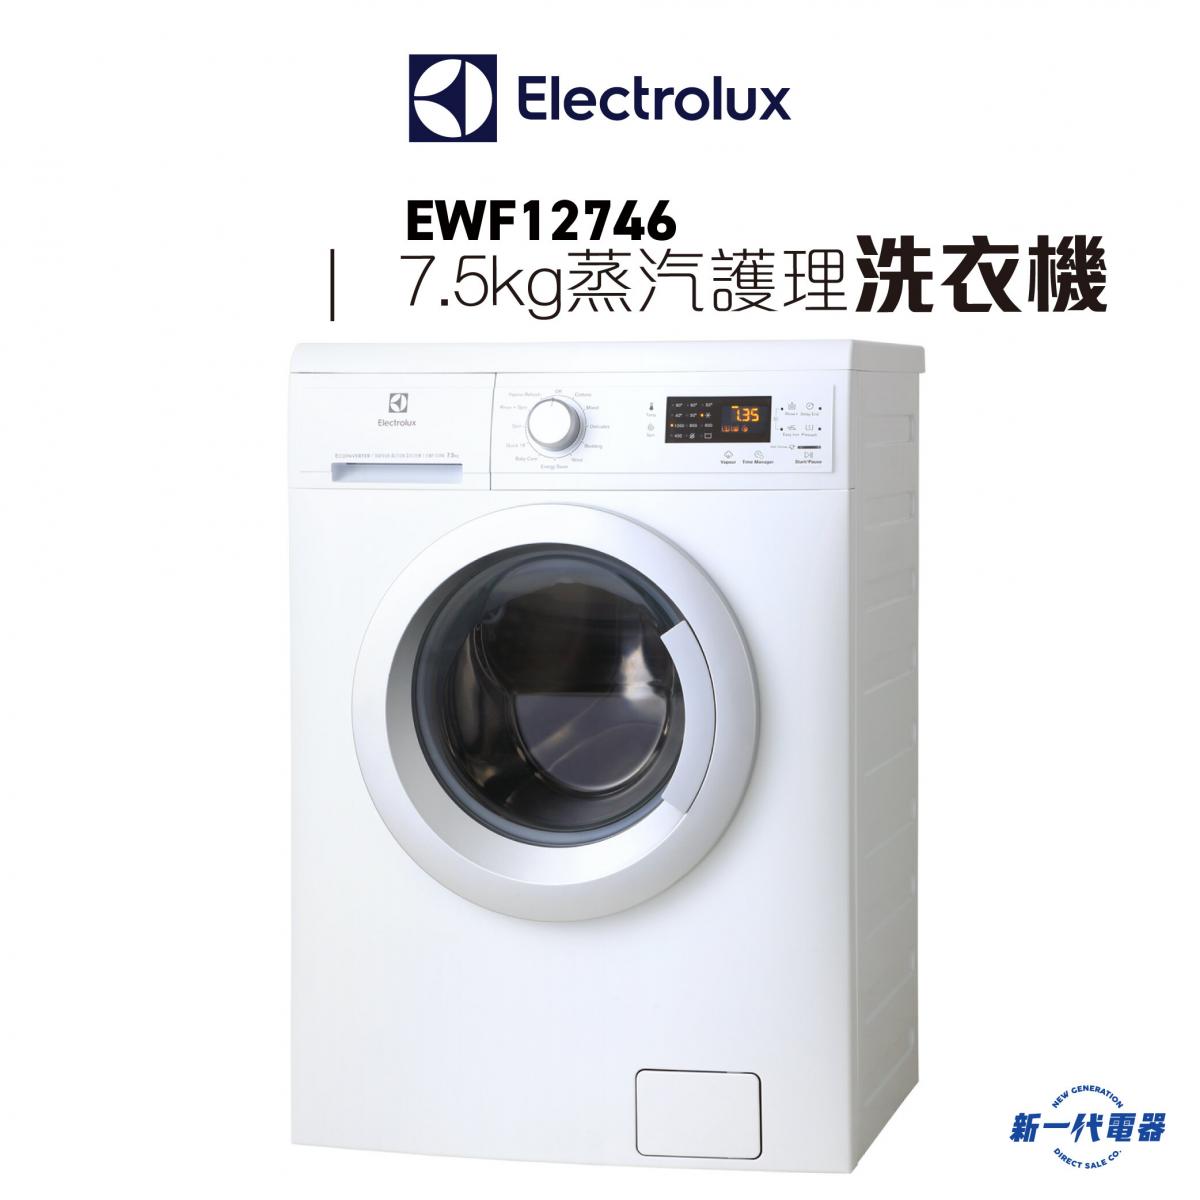 EWF12746 -7.5kg 1200rpm Vapour Care Washing Machine